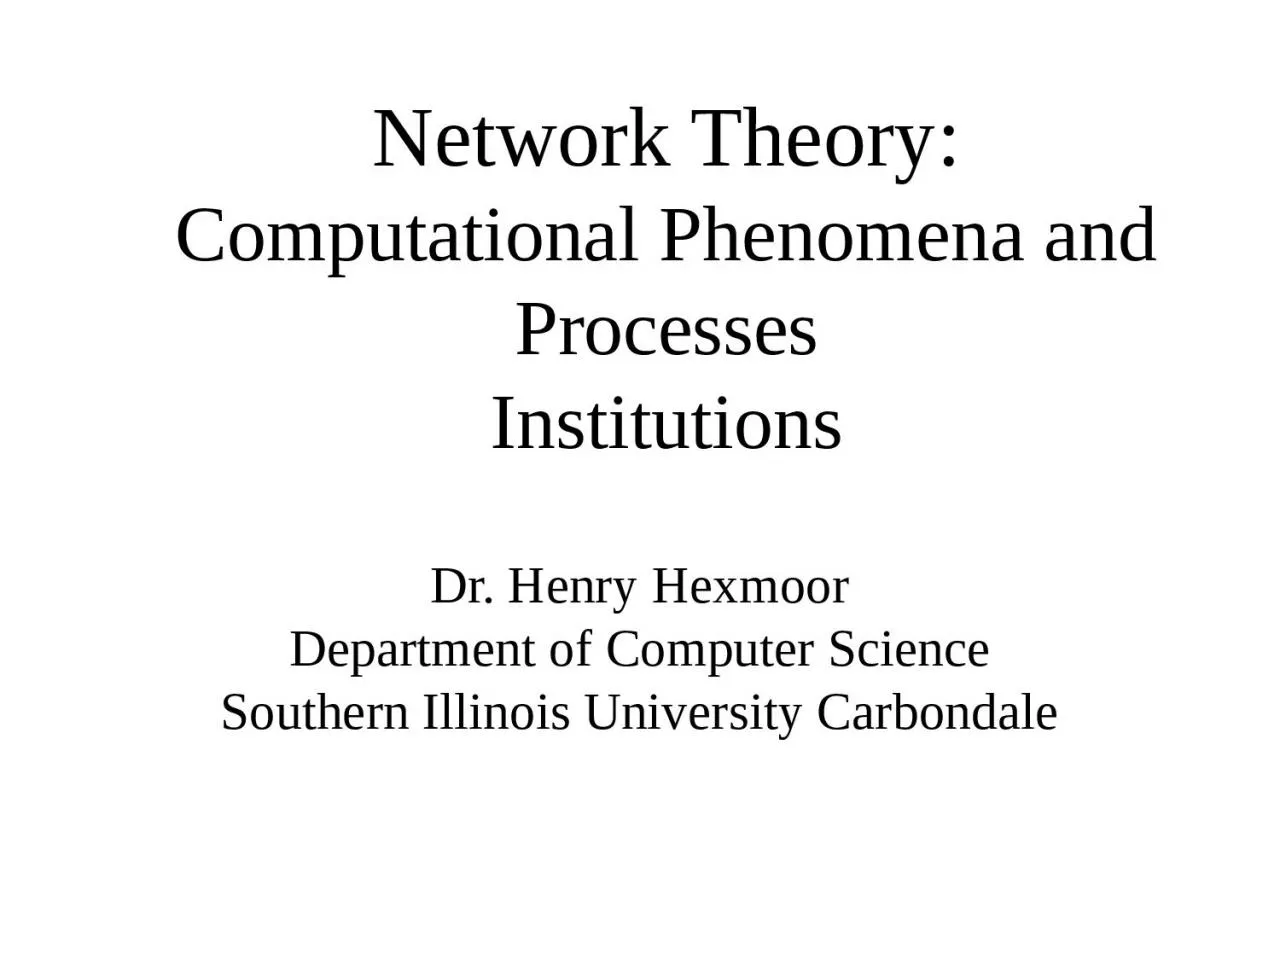 Network Theory: Computational Phenomena and Processes